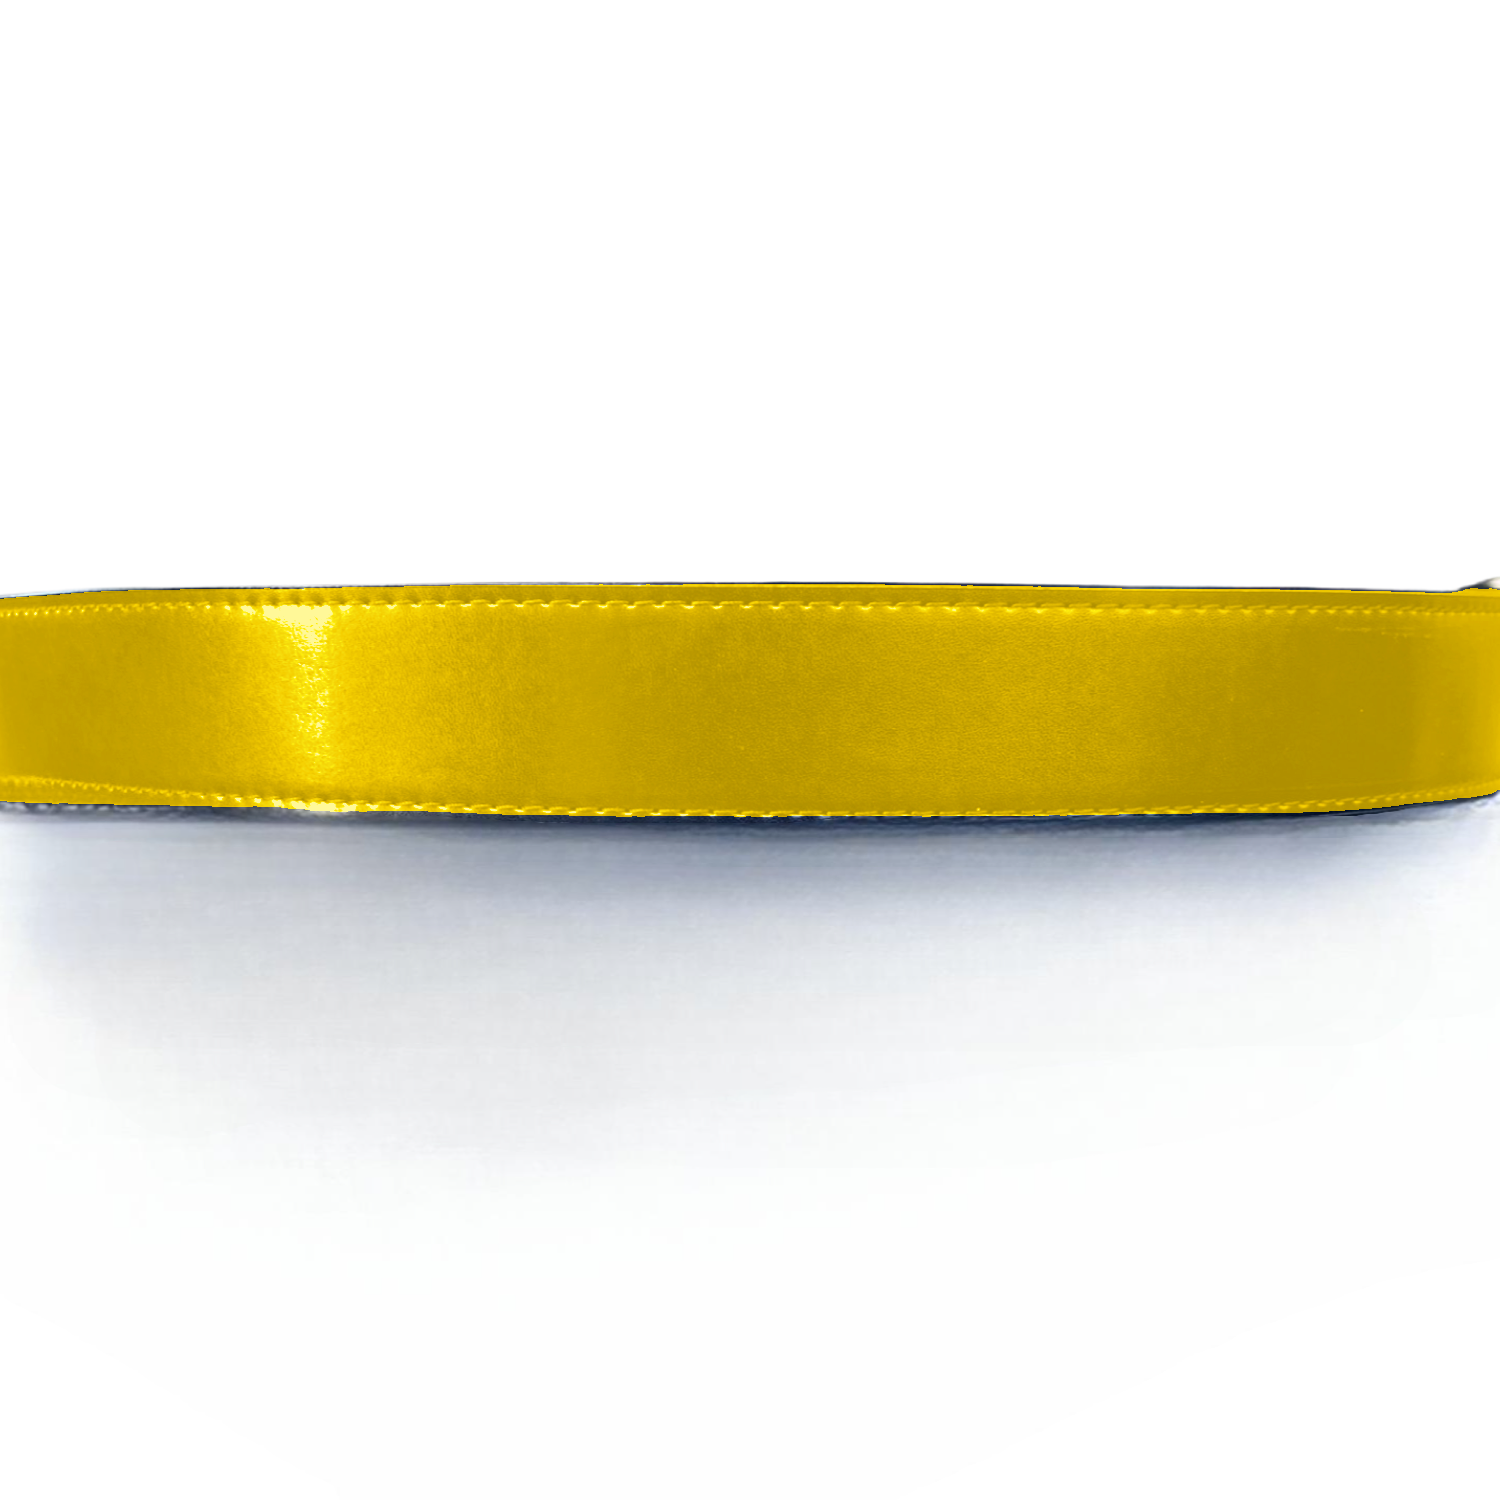 Standard Gold Baller Leather Belt